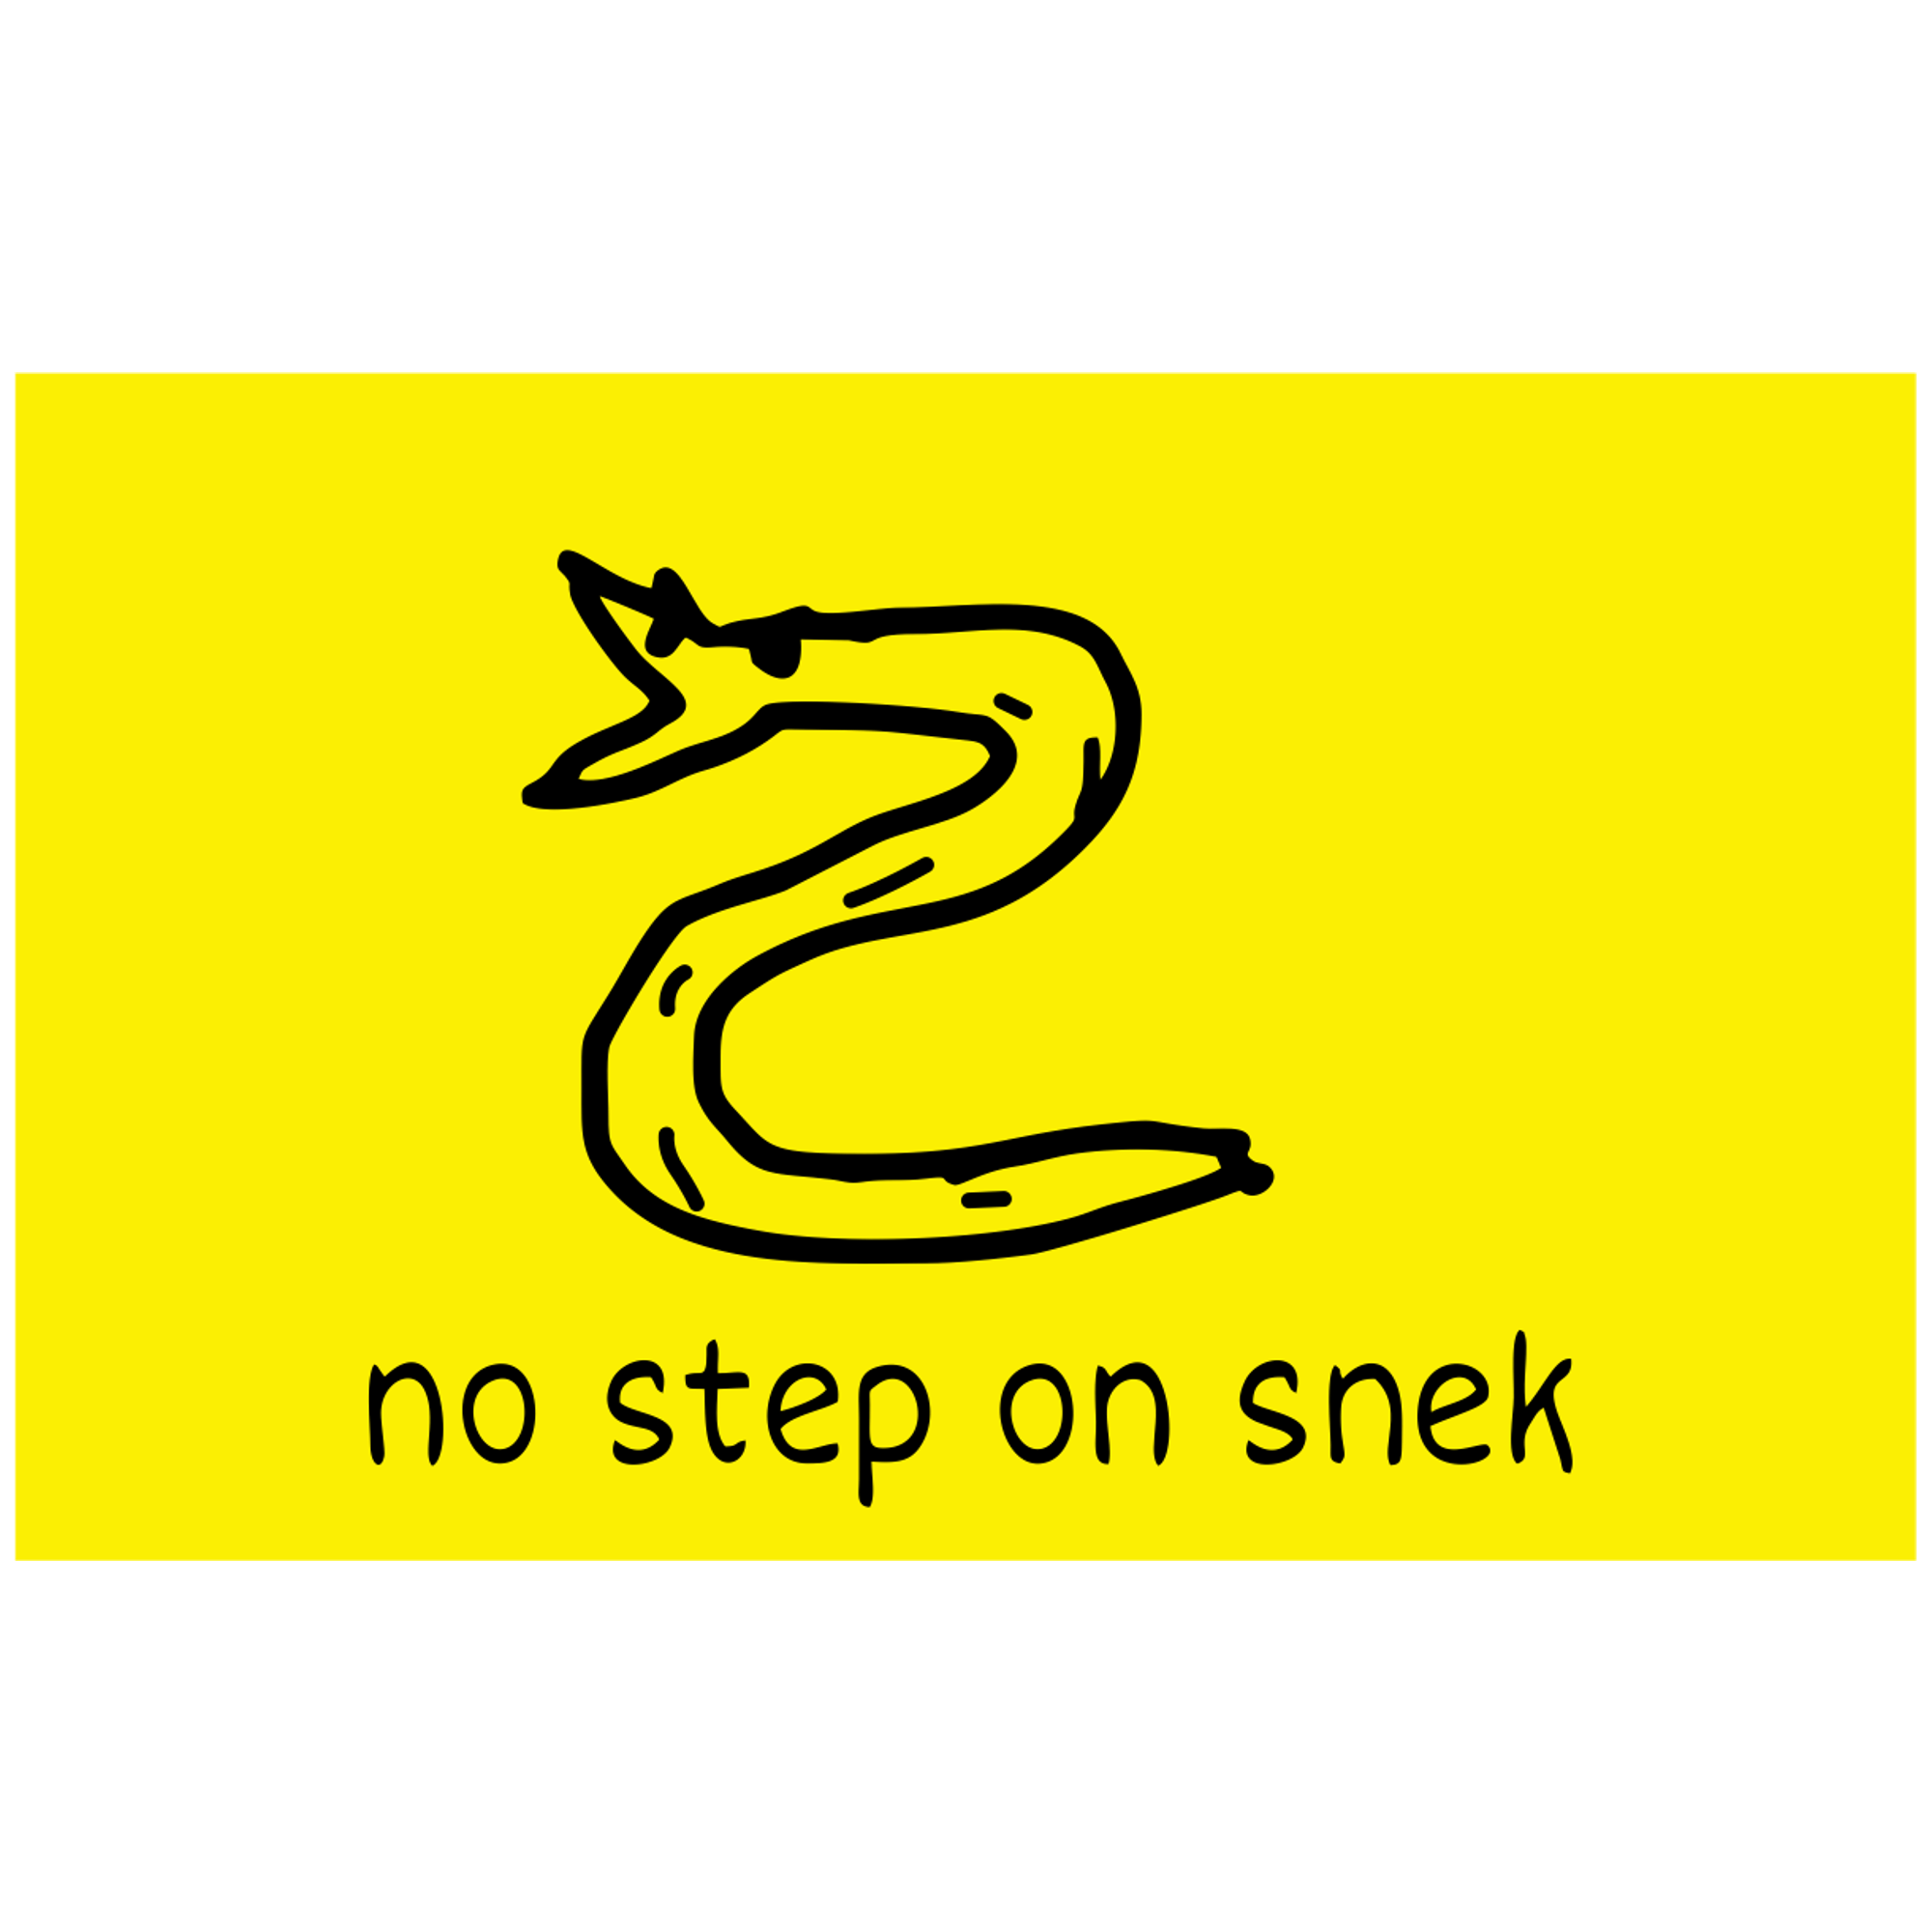 No Step on Snek T-Shirt